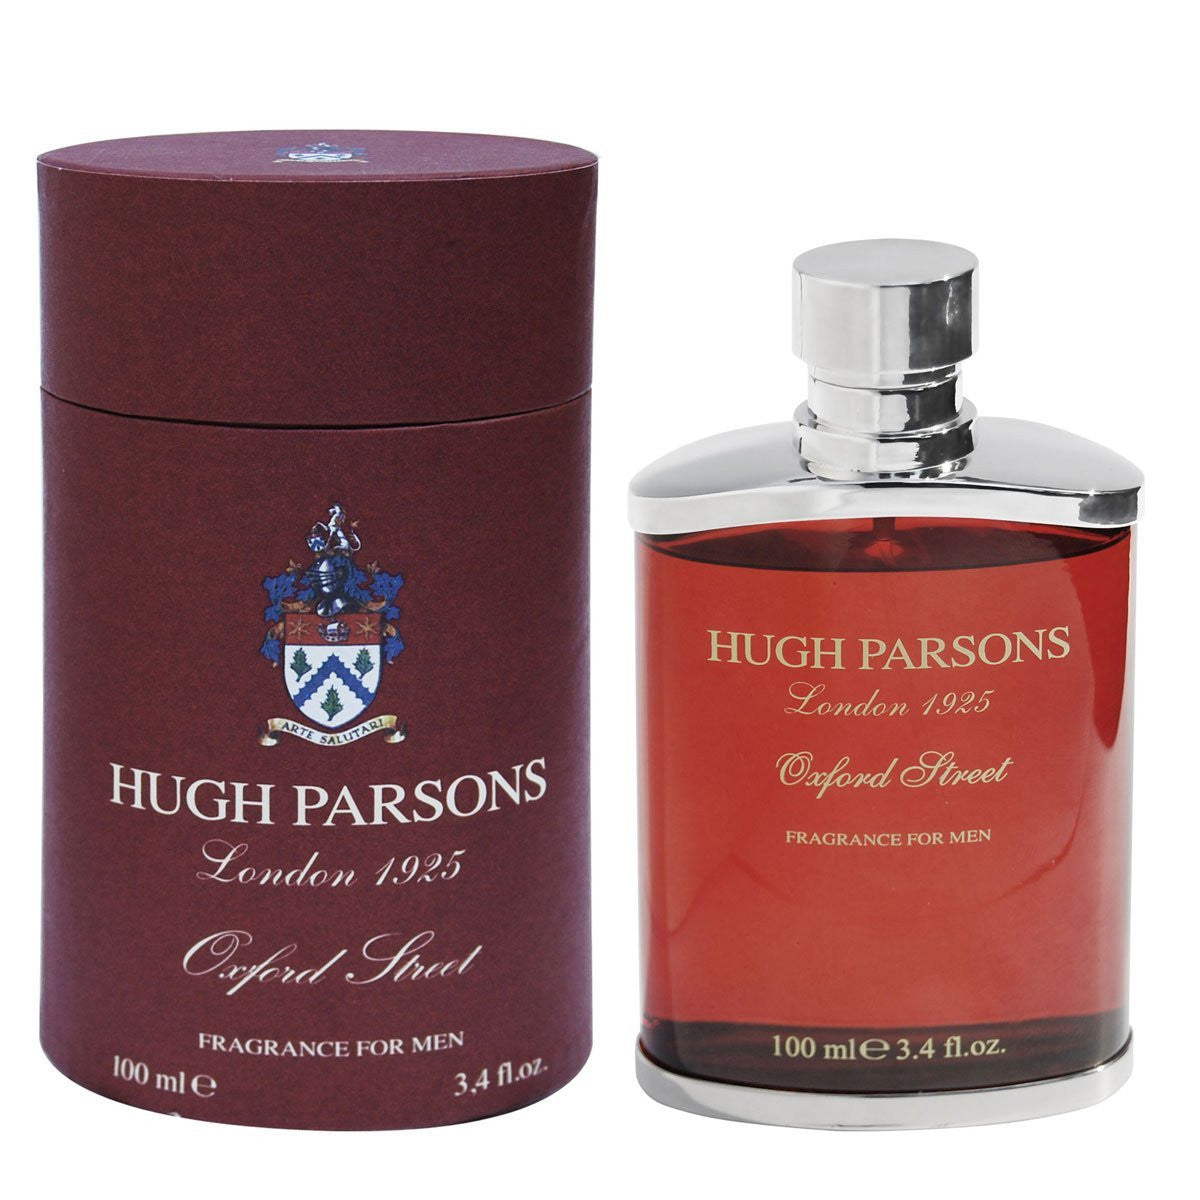 Hugh Parsons Oxford Street Eau De Parfum 100 ml - RossoLaccaStore